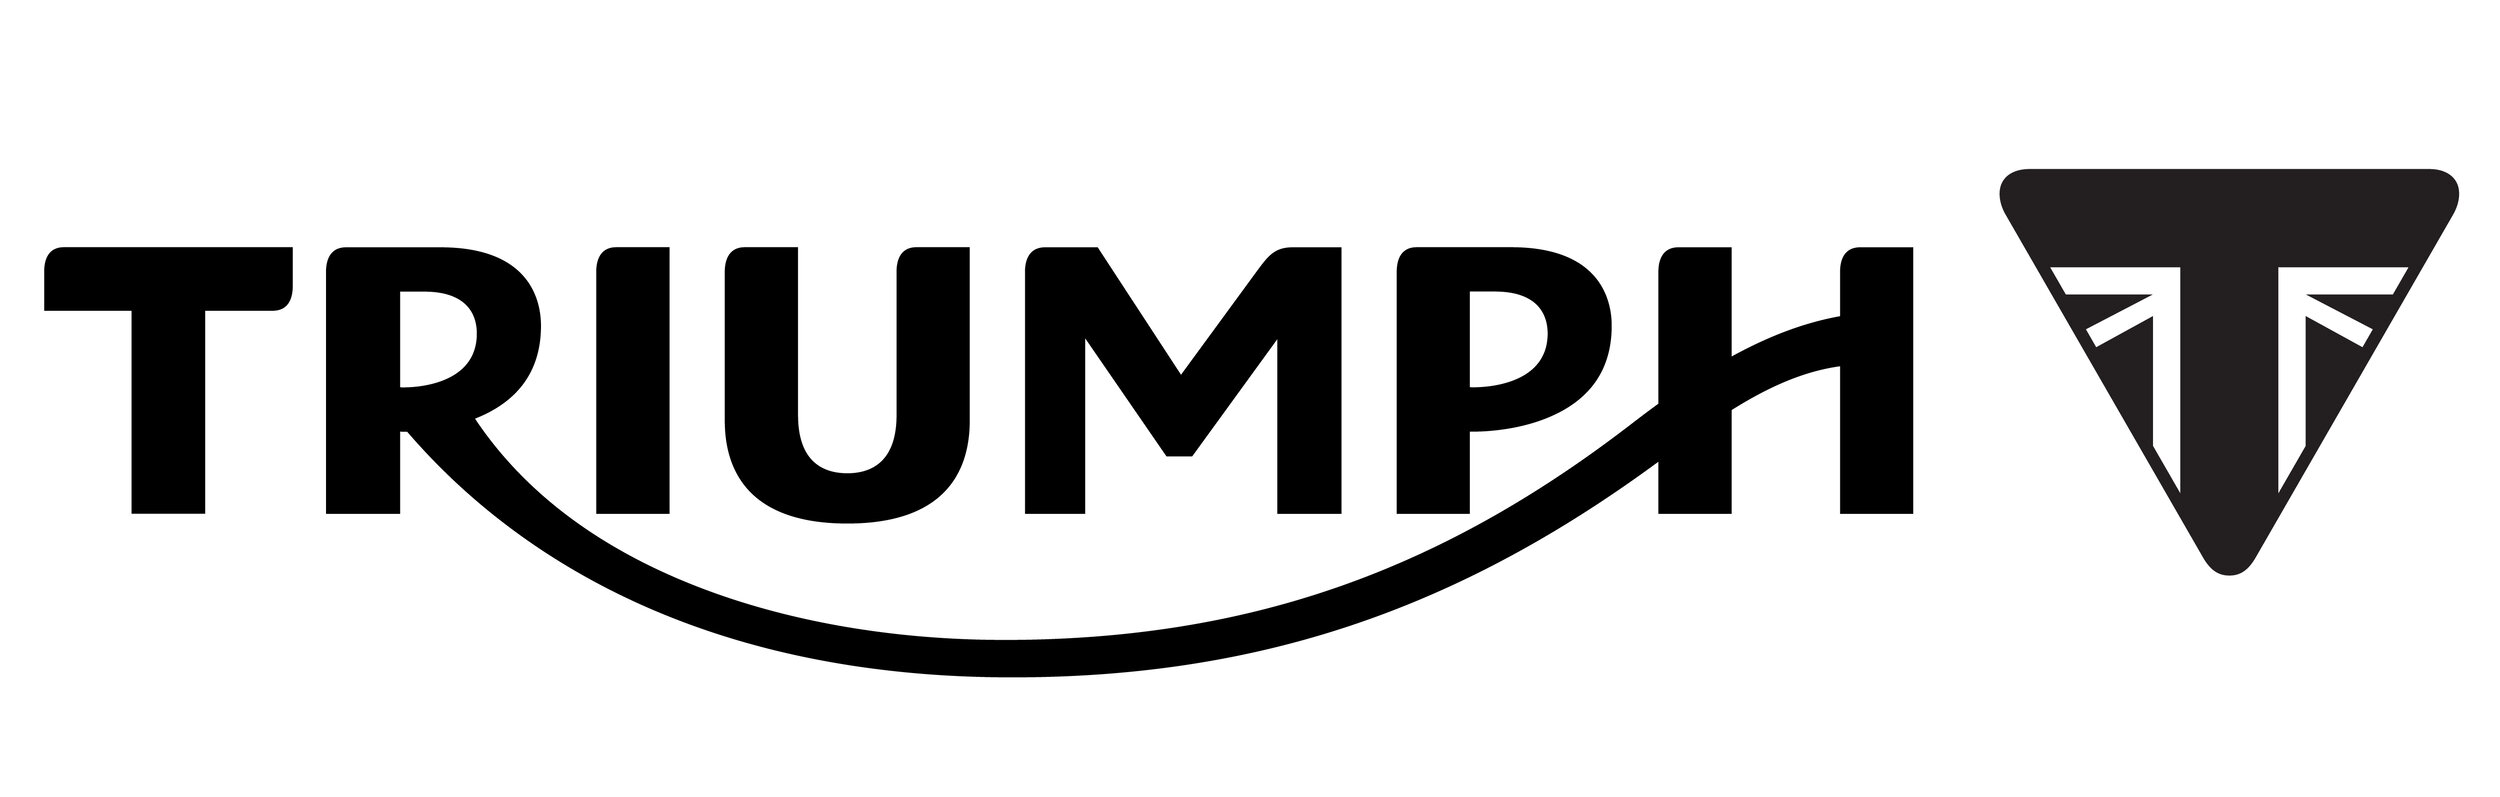 Triumph-logo-2013.jpeg